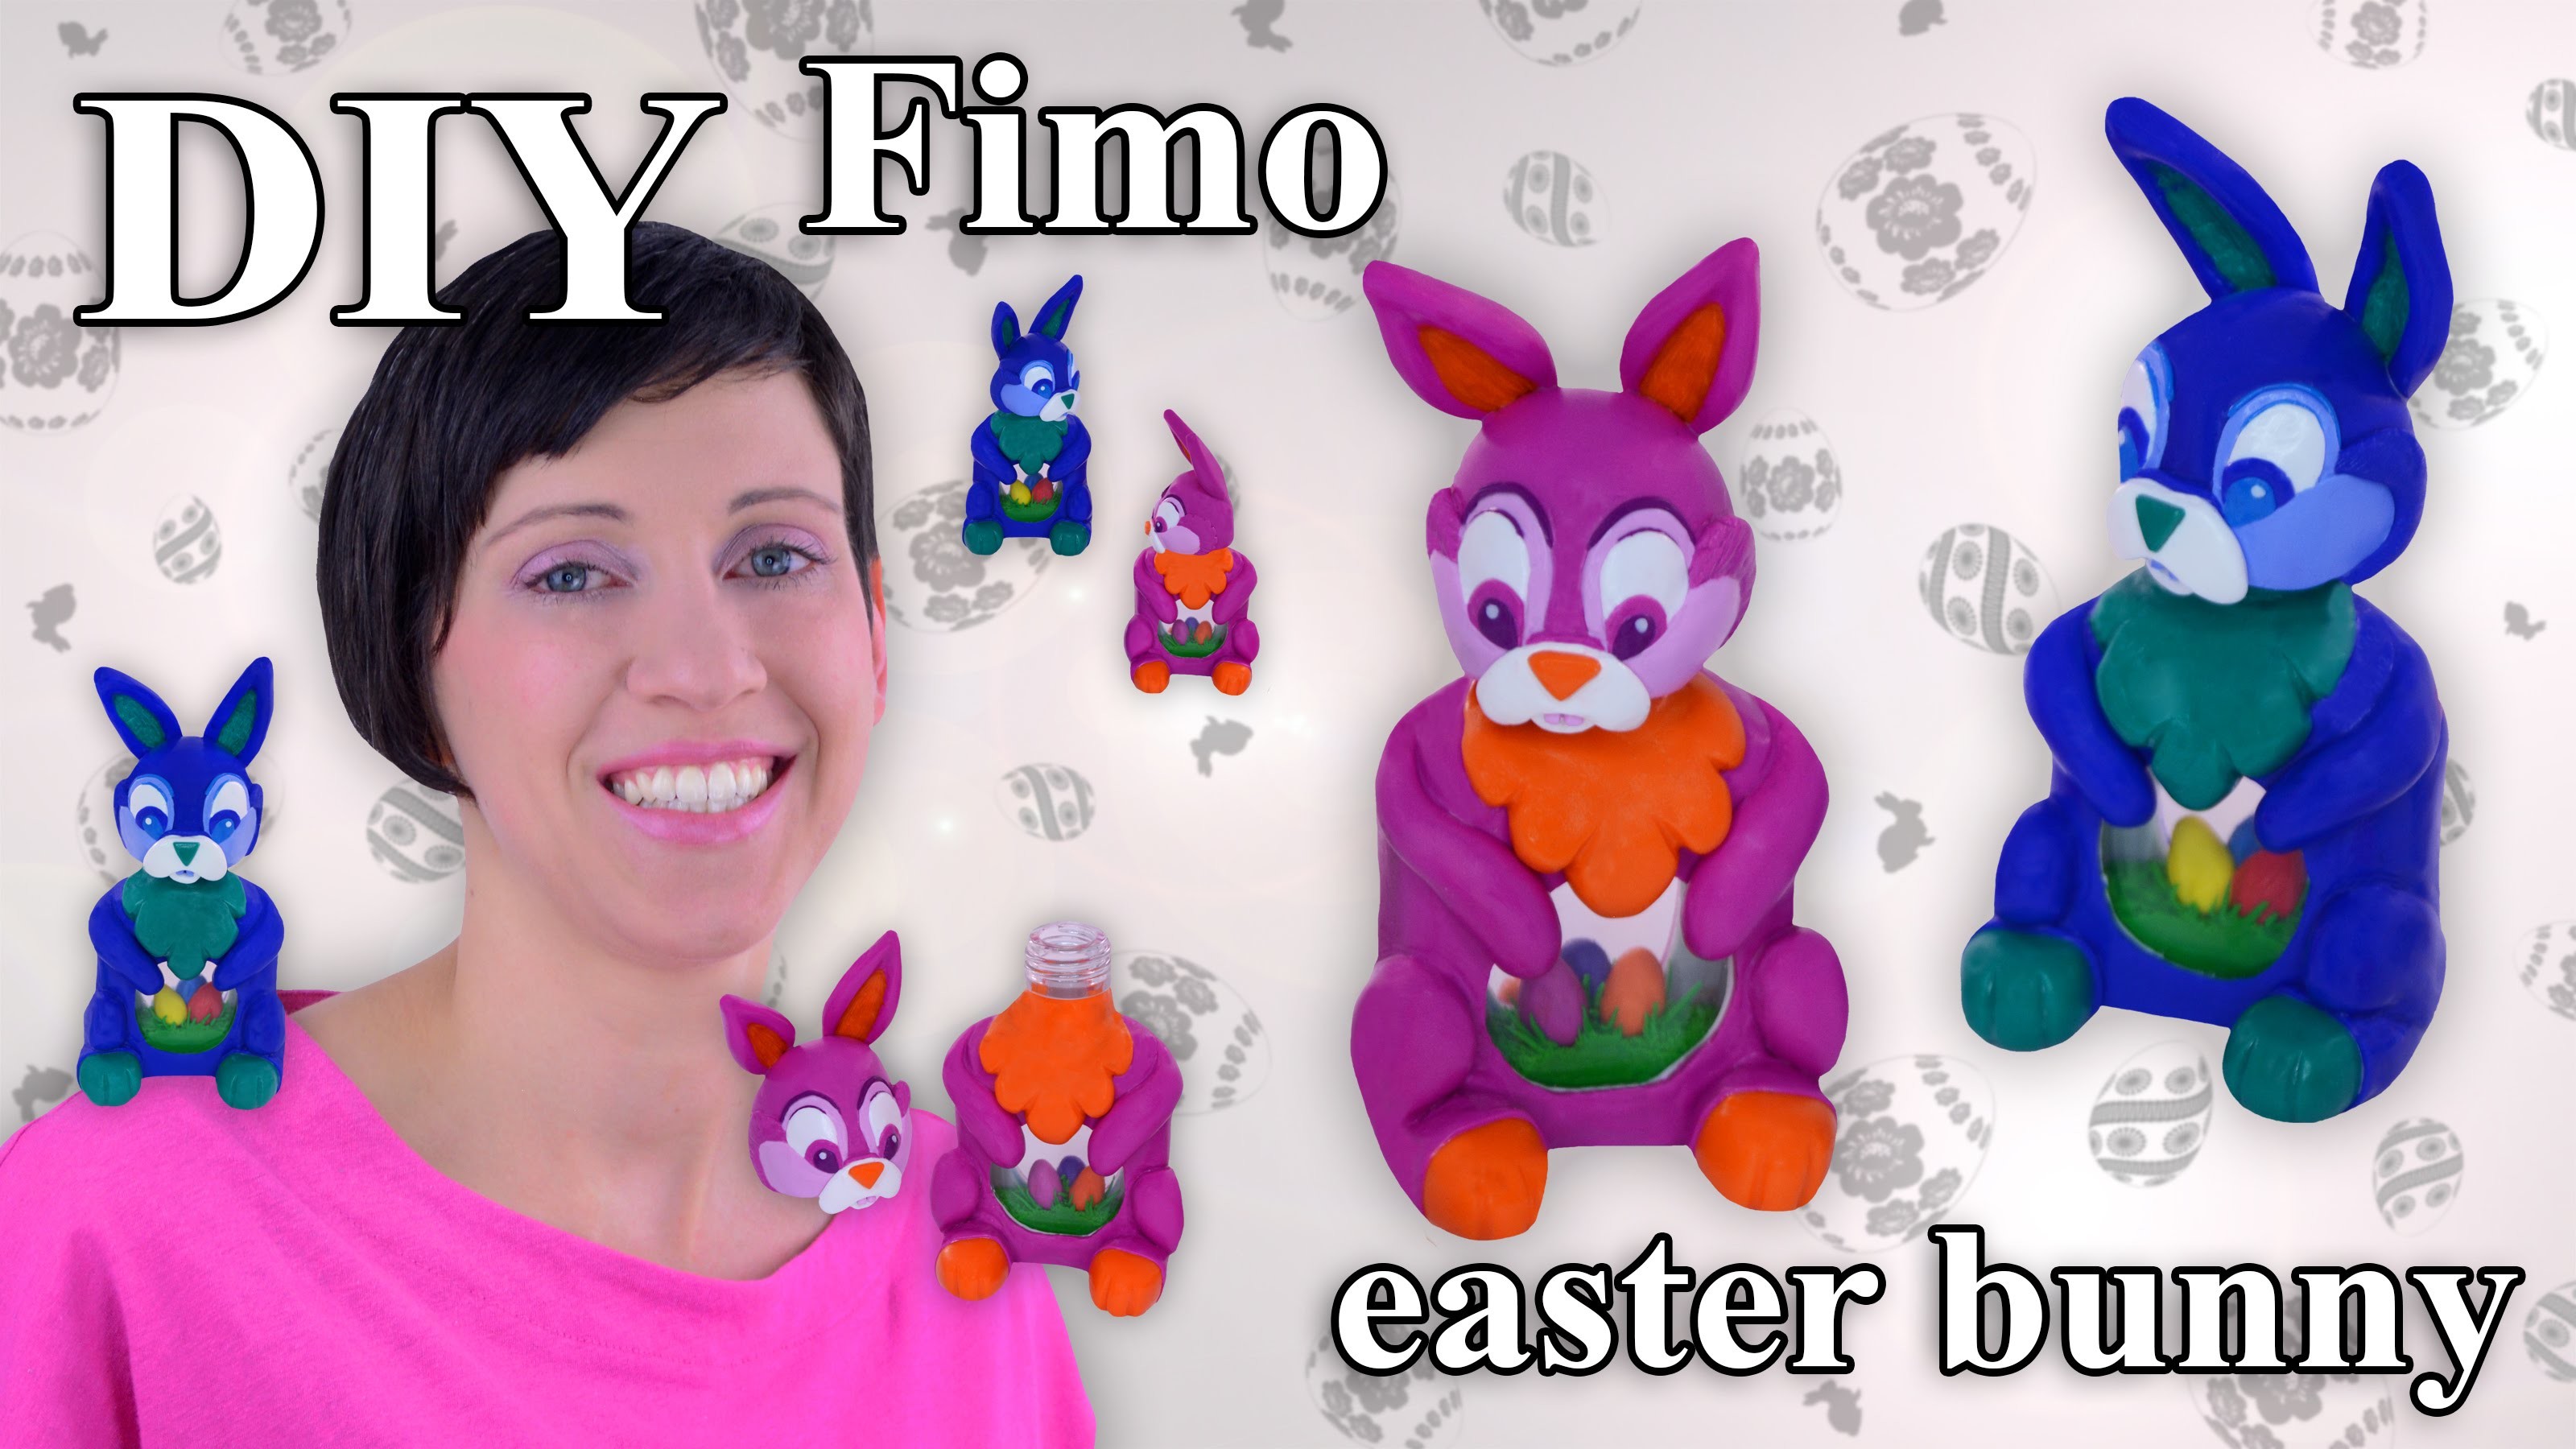 FIMO Osterhase: Polymer Clay Easter Bunny - Tutorial [HD.DE] (EN-Sub)